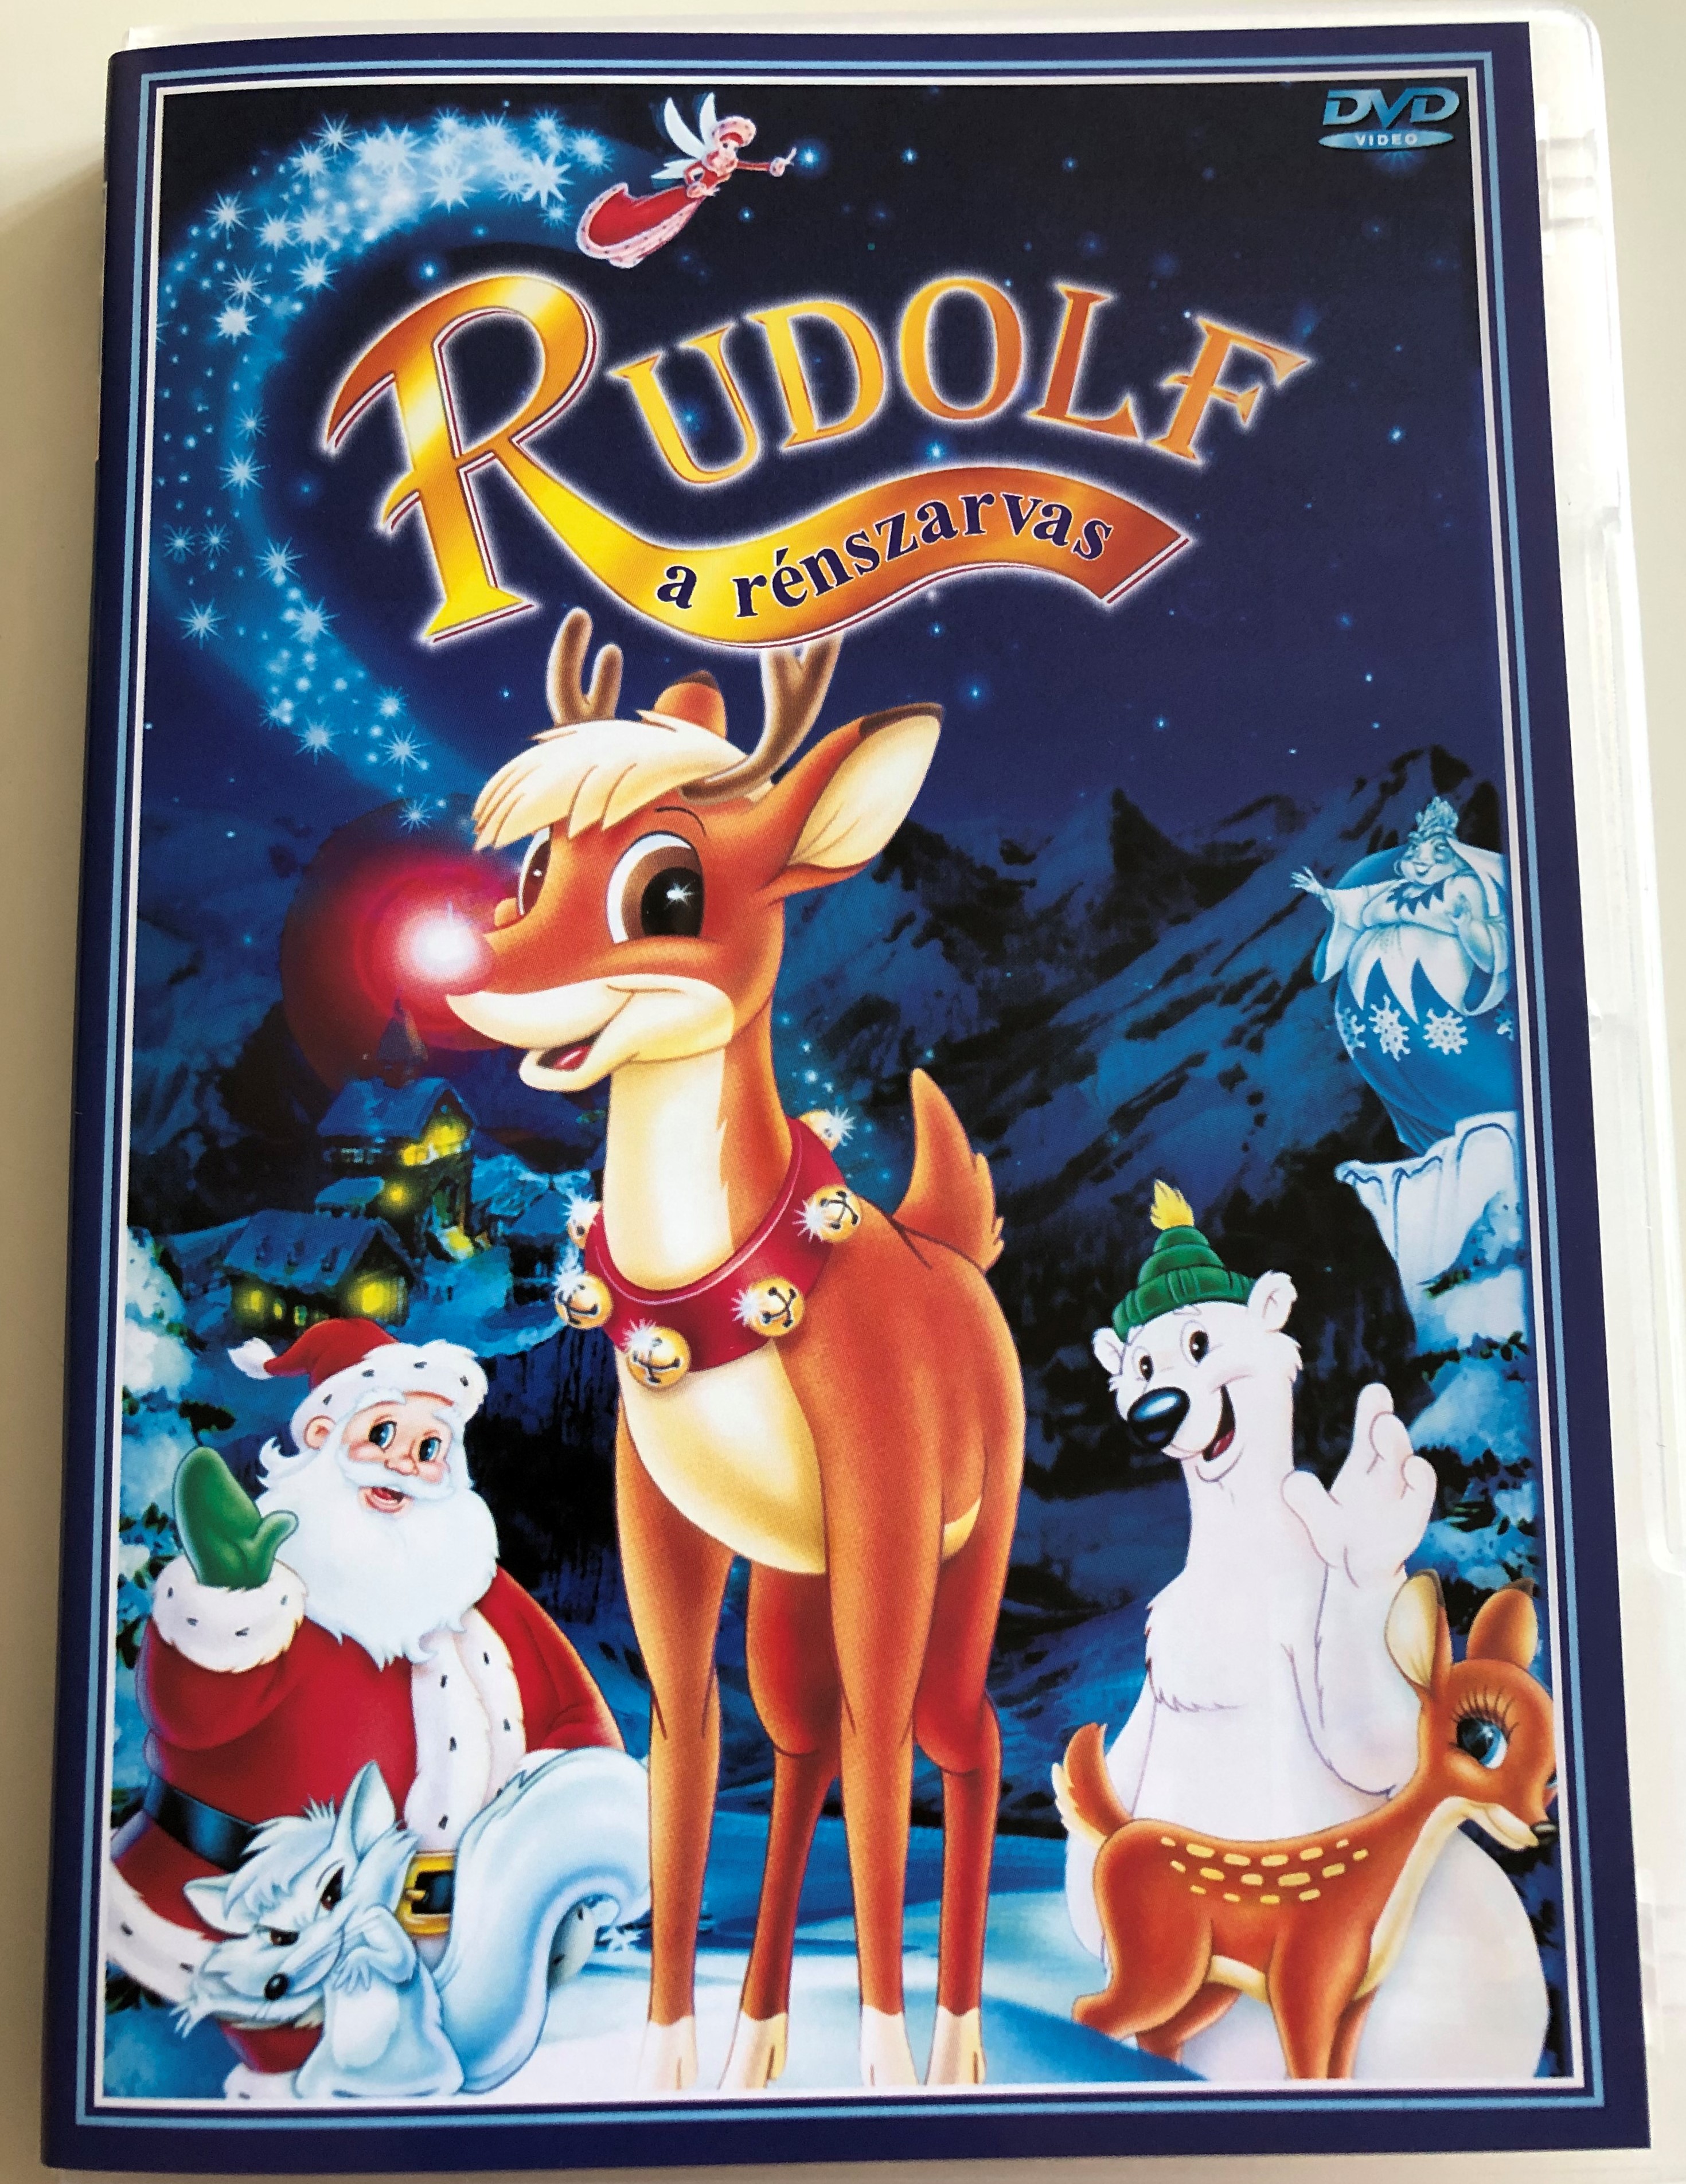 rudolph-the-red-nose-reindeer-the-movie-dvd-1998-rudolf-a-r-nszarvas-directed-by-bill-kowalchuk-1-.jpg